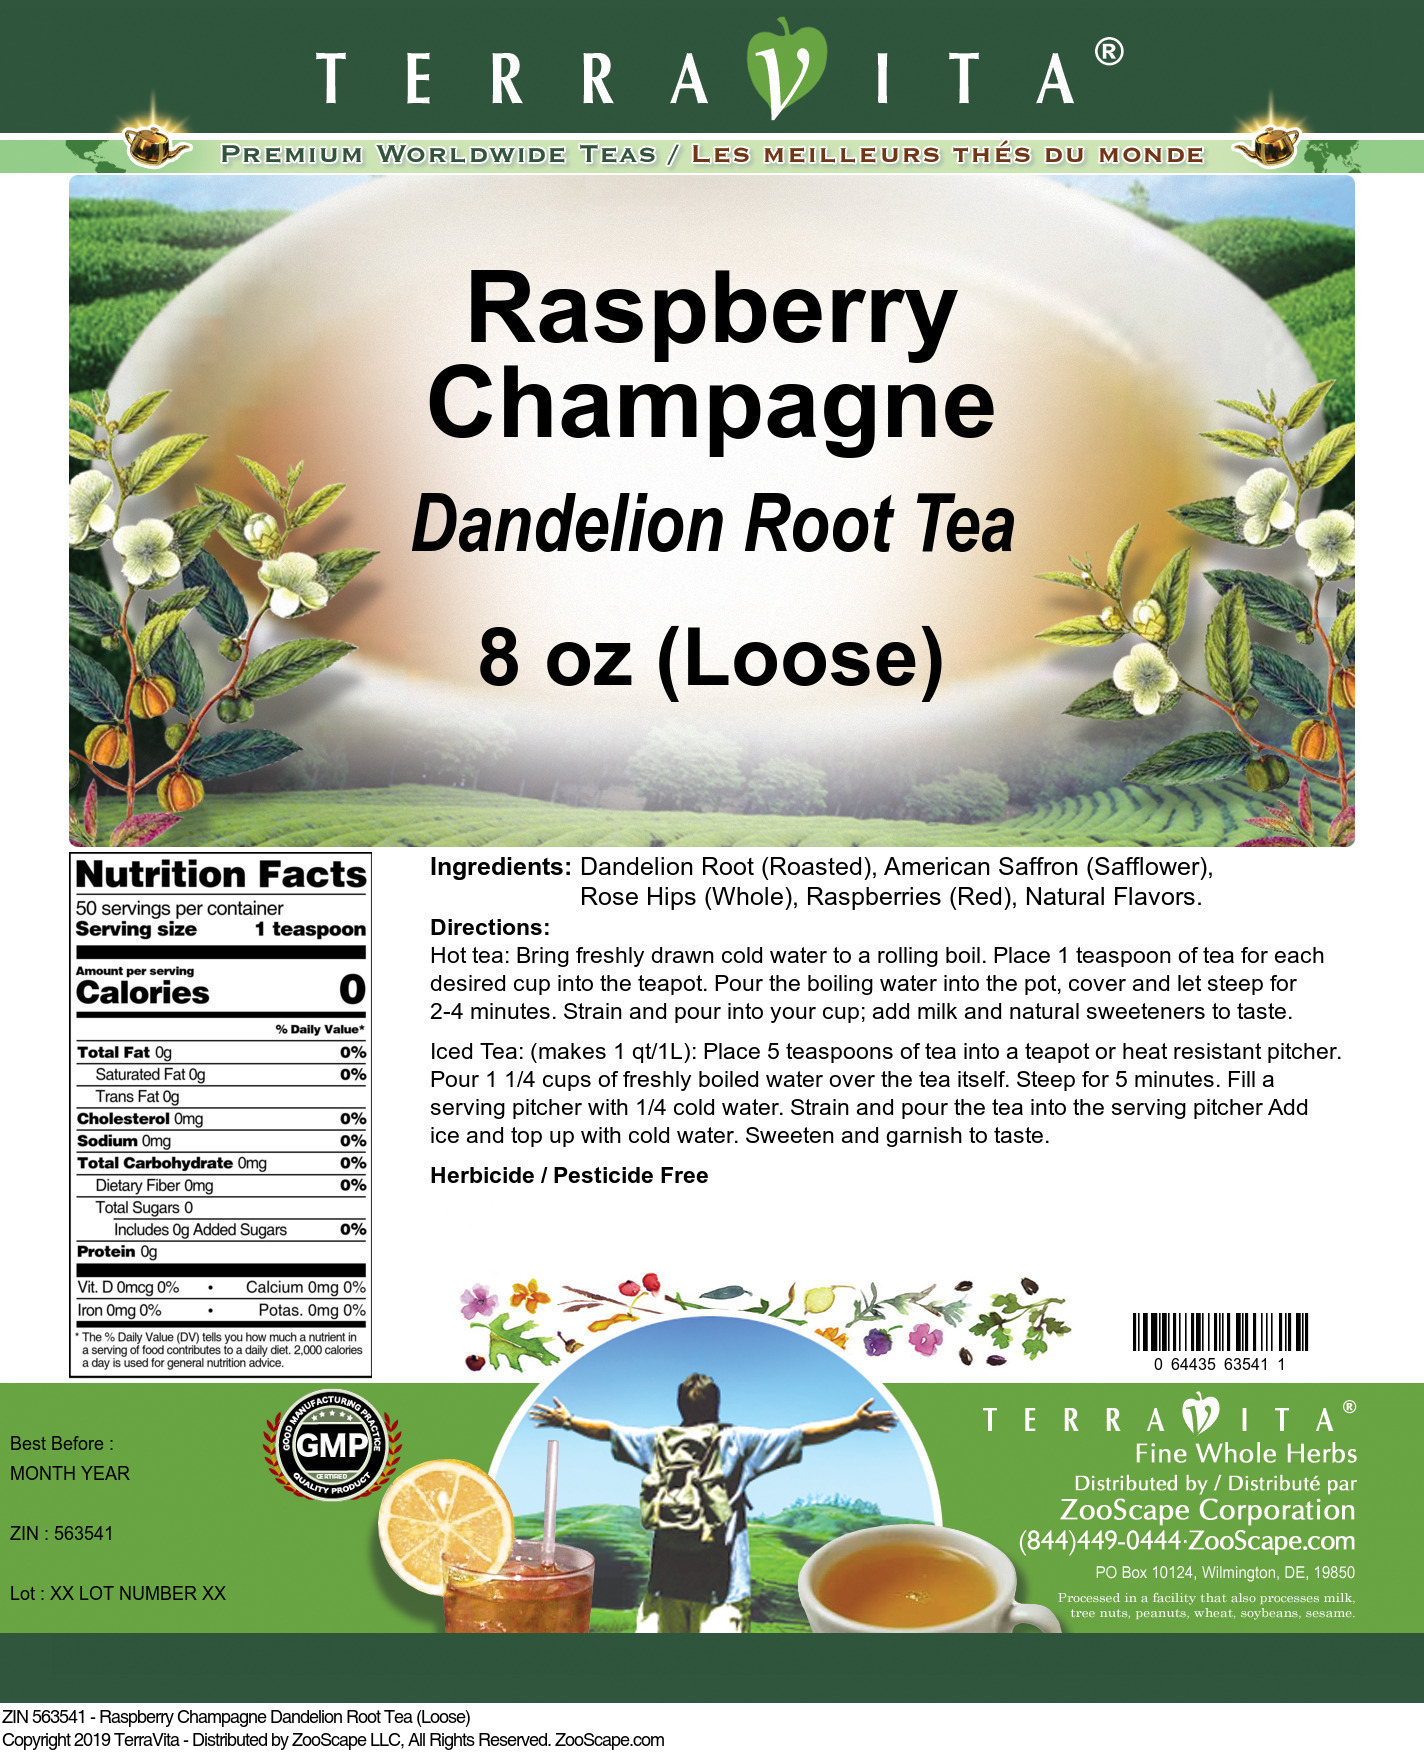 Raspberry Champagne Dandelion Root Tea (Loose) - Label